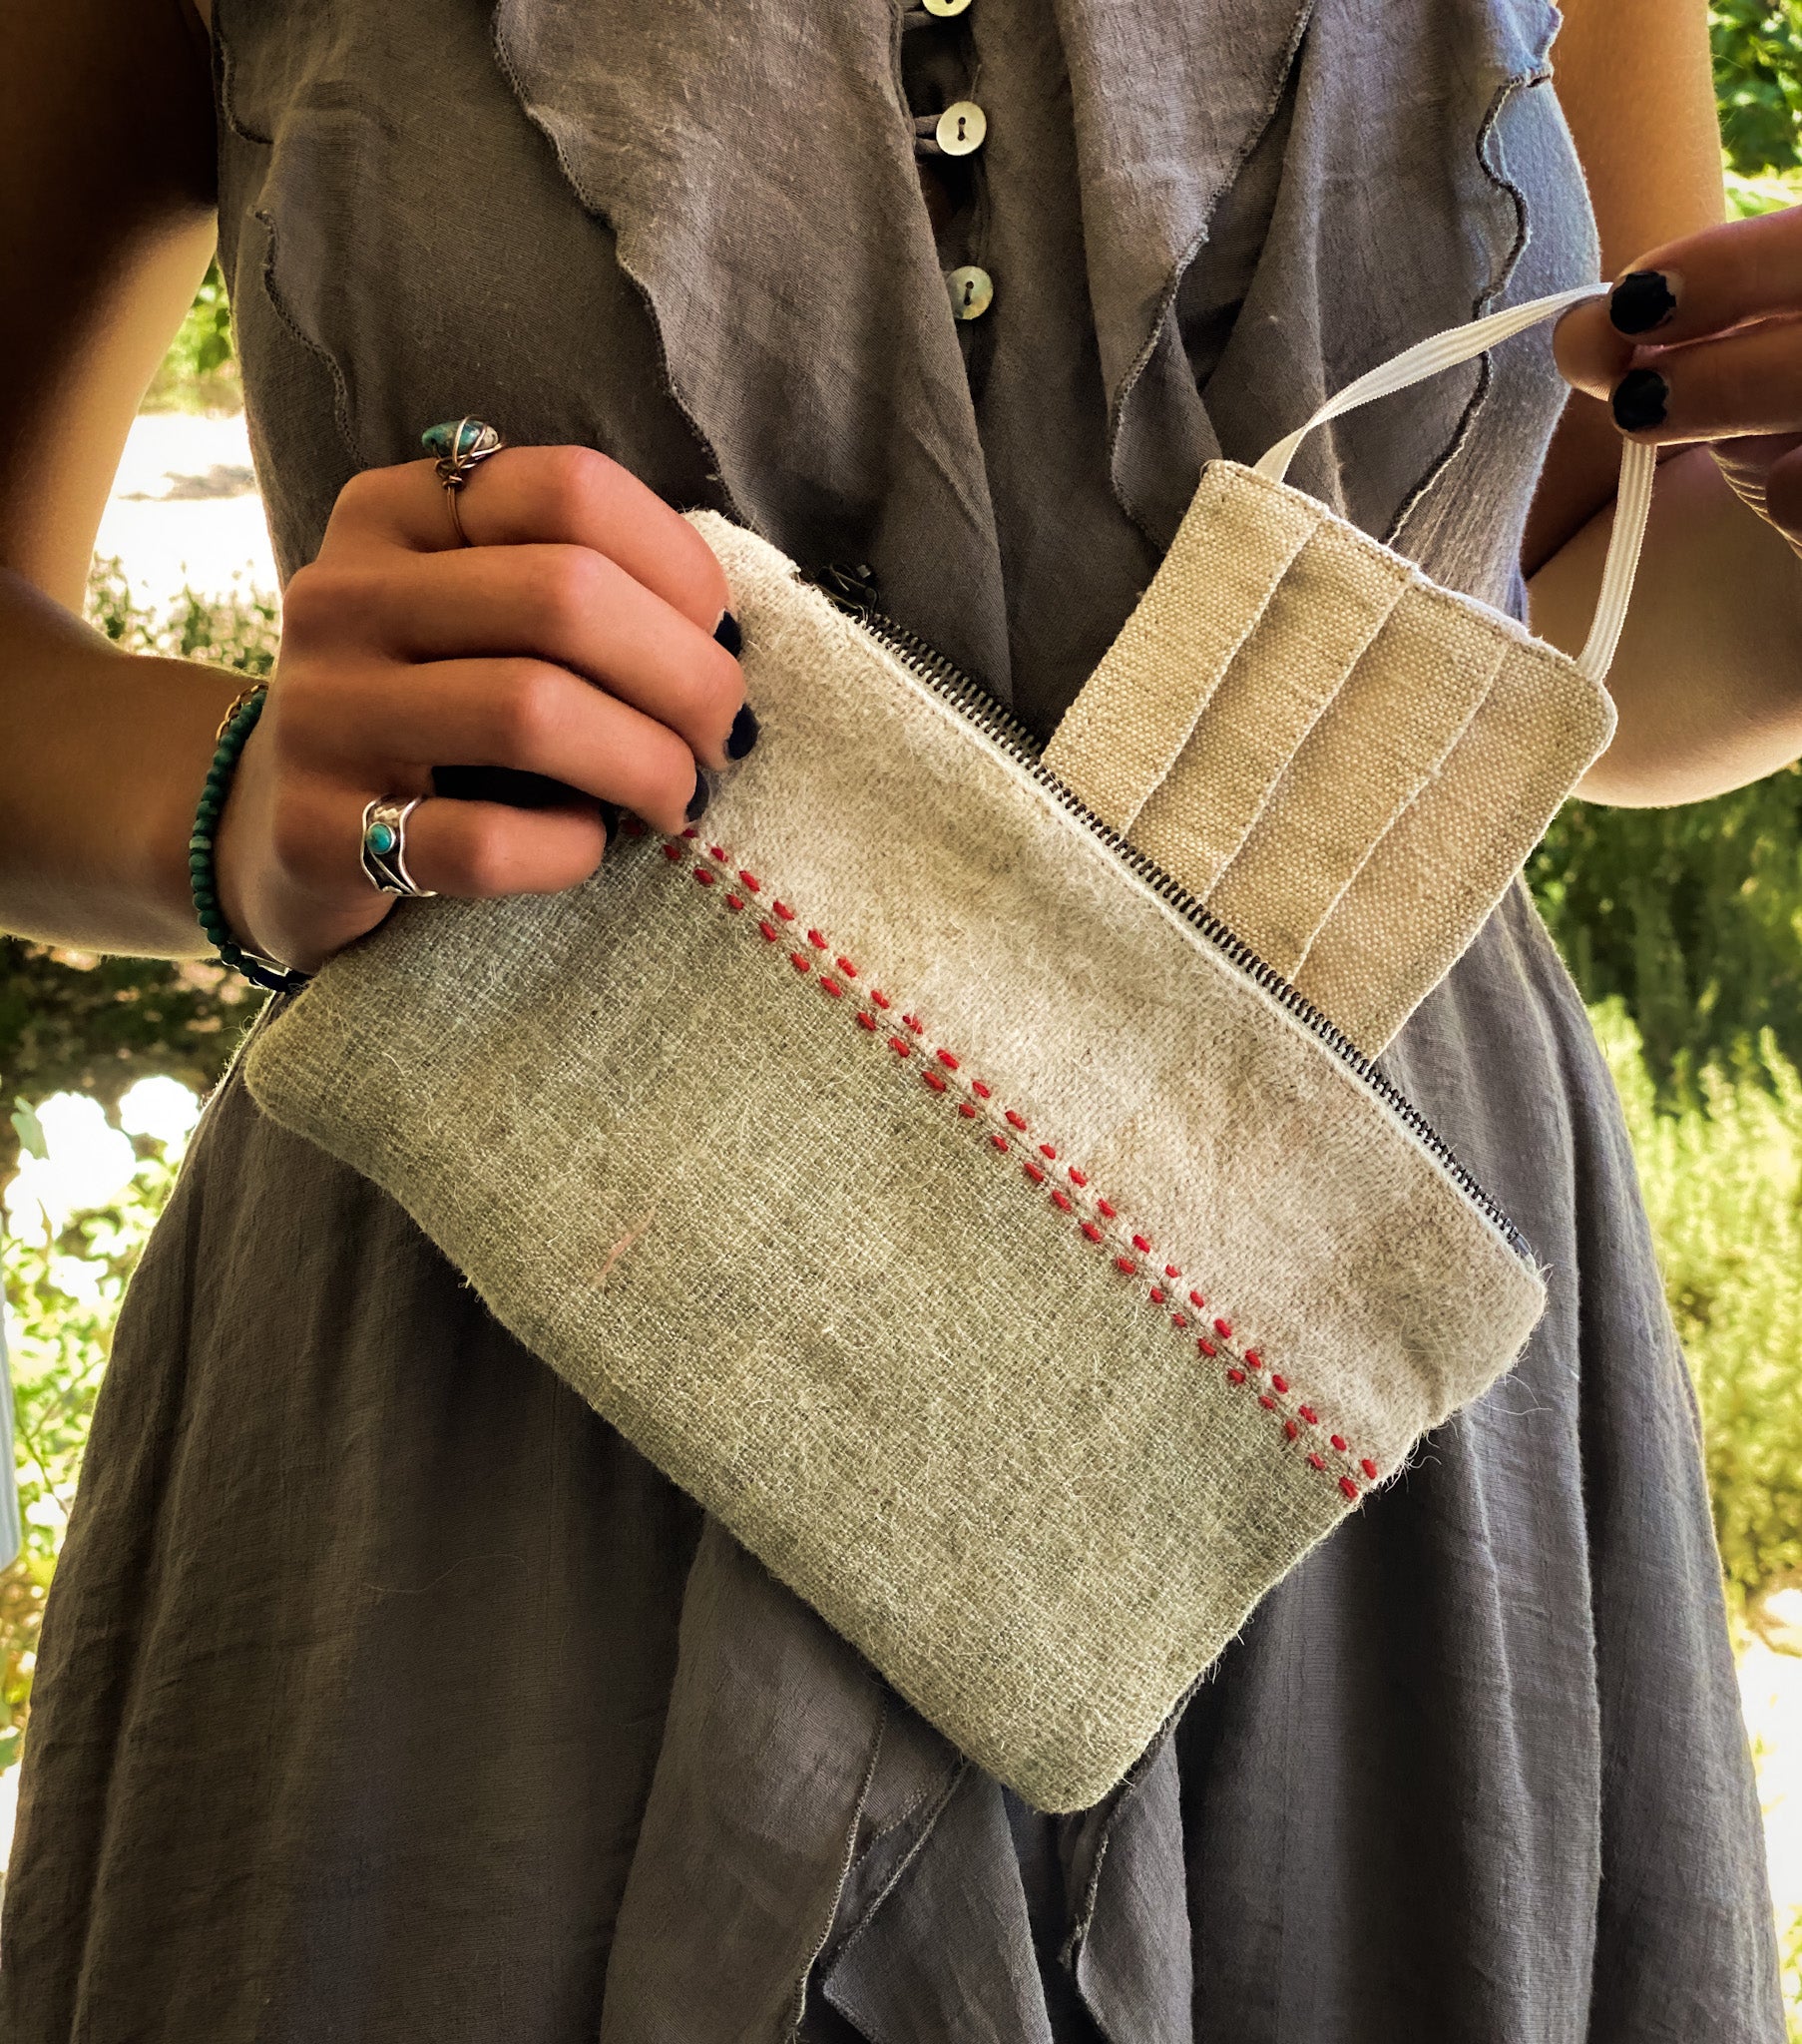 Bag: Handwoven wool, interior handwoven hemp lining - BG67